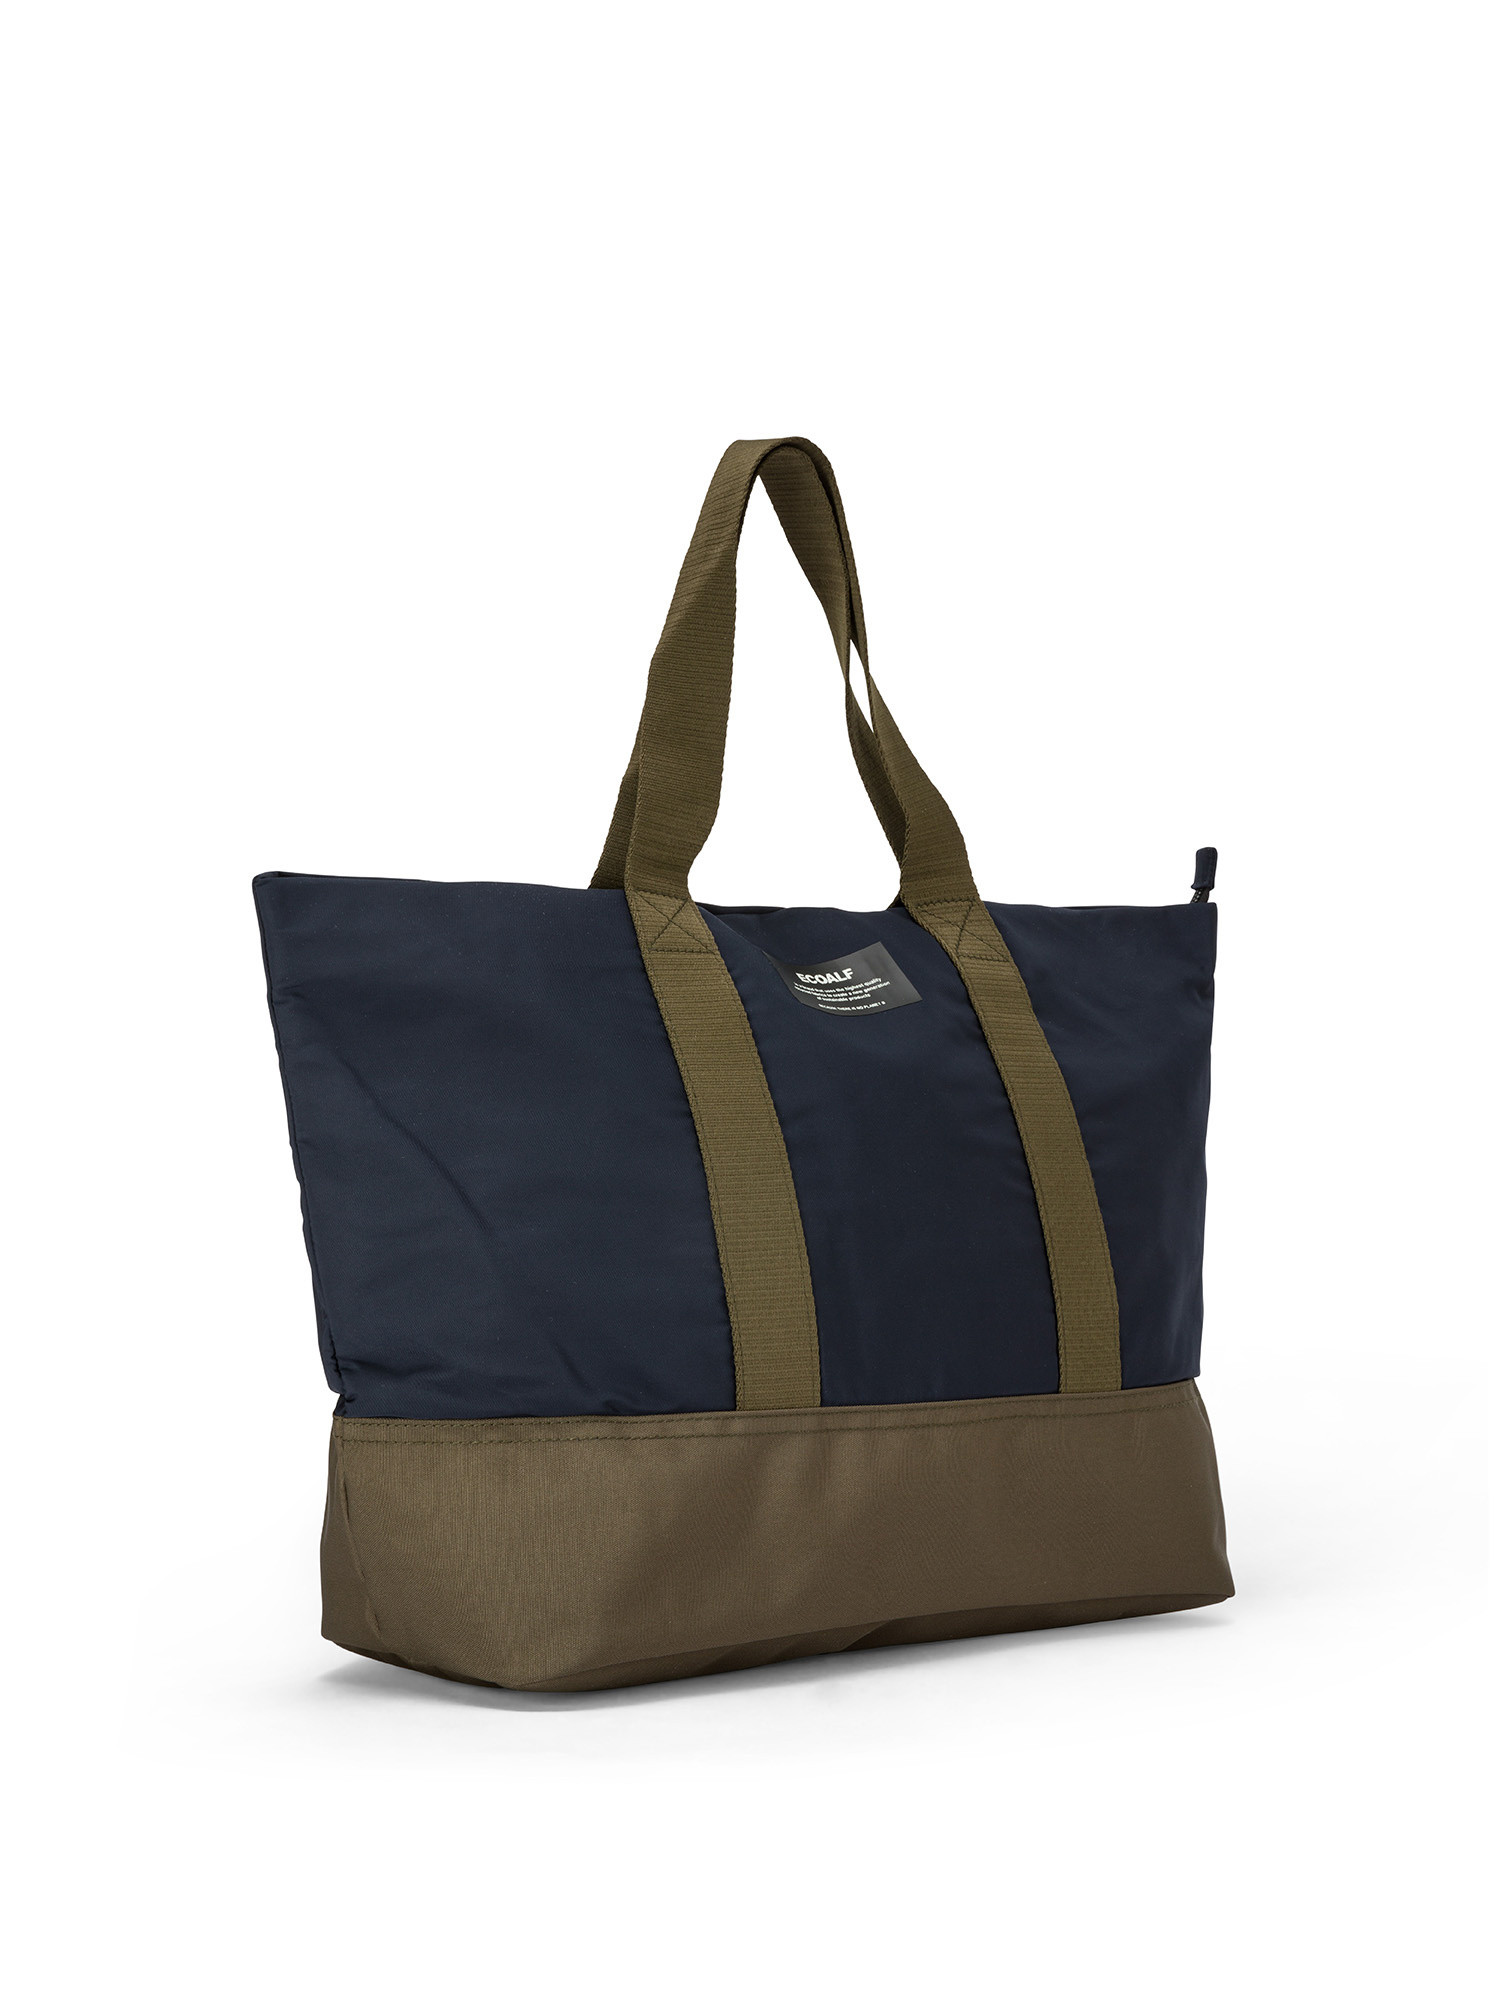 Ecoalf - Leblon bag with logo, Blue, large image number 1